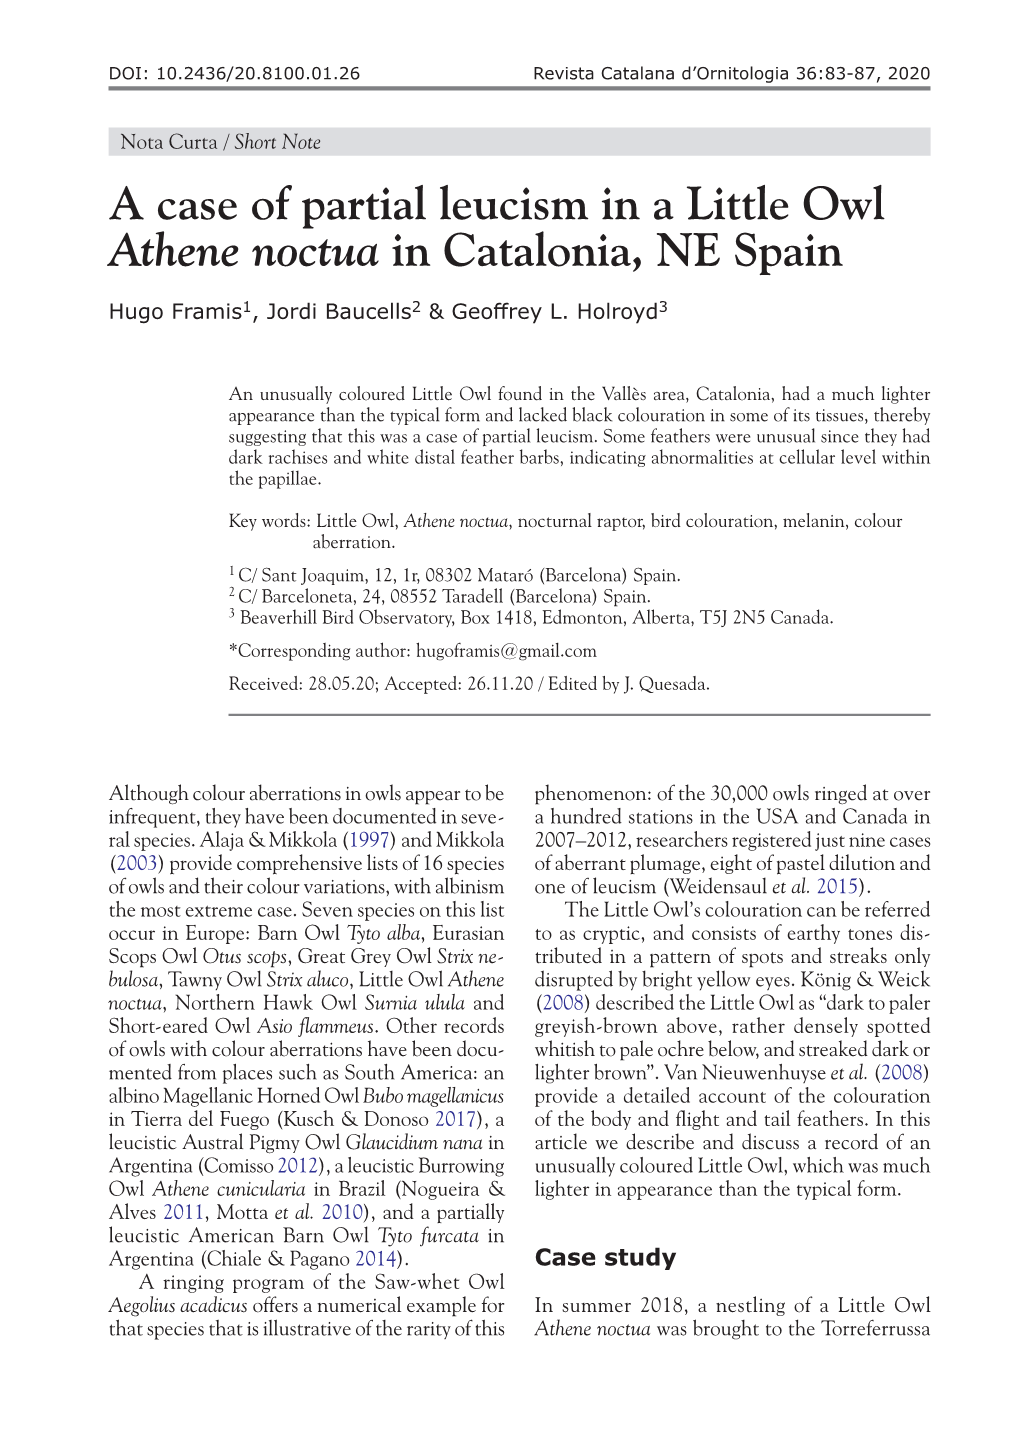 A Case of Partial Leucism in a Little Owl Athene Noctua in Catalonia, NE Spain